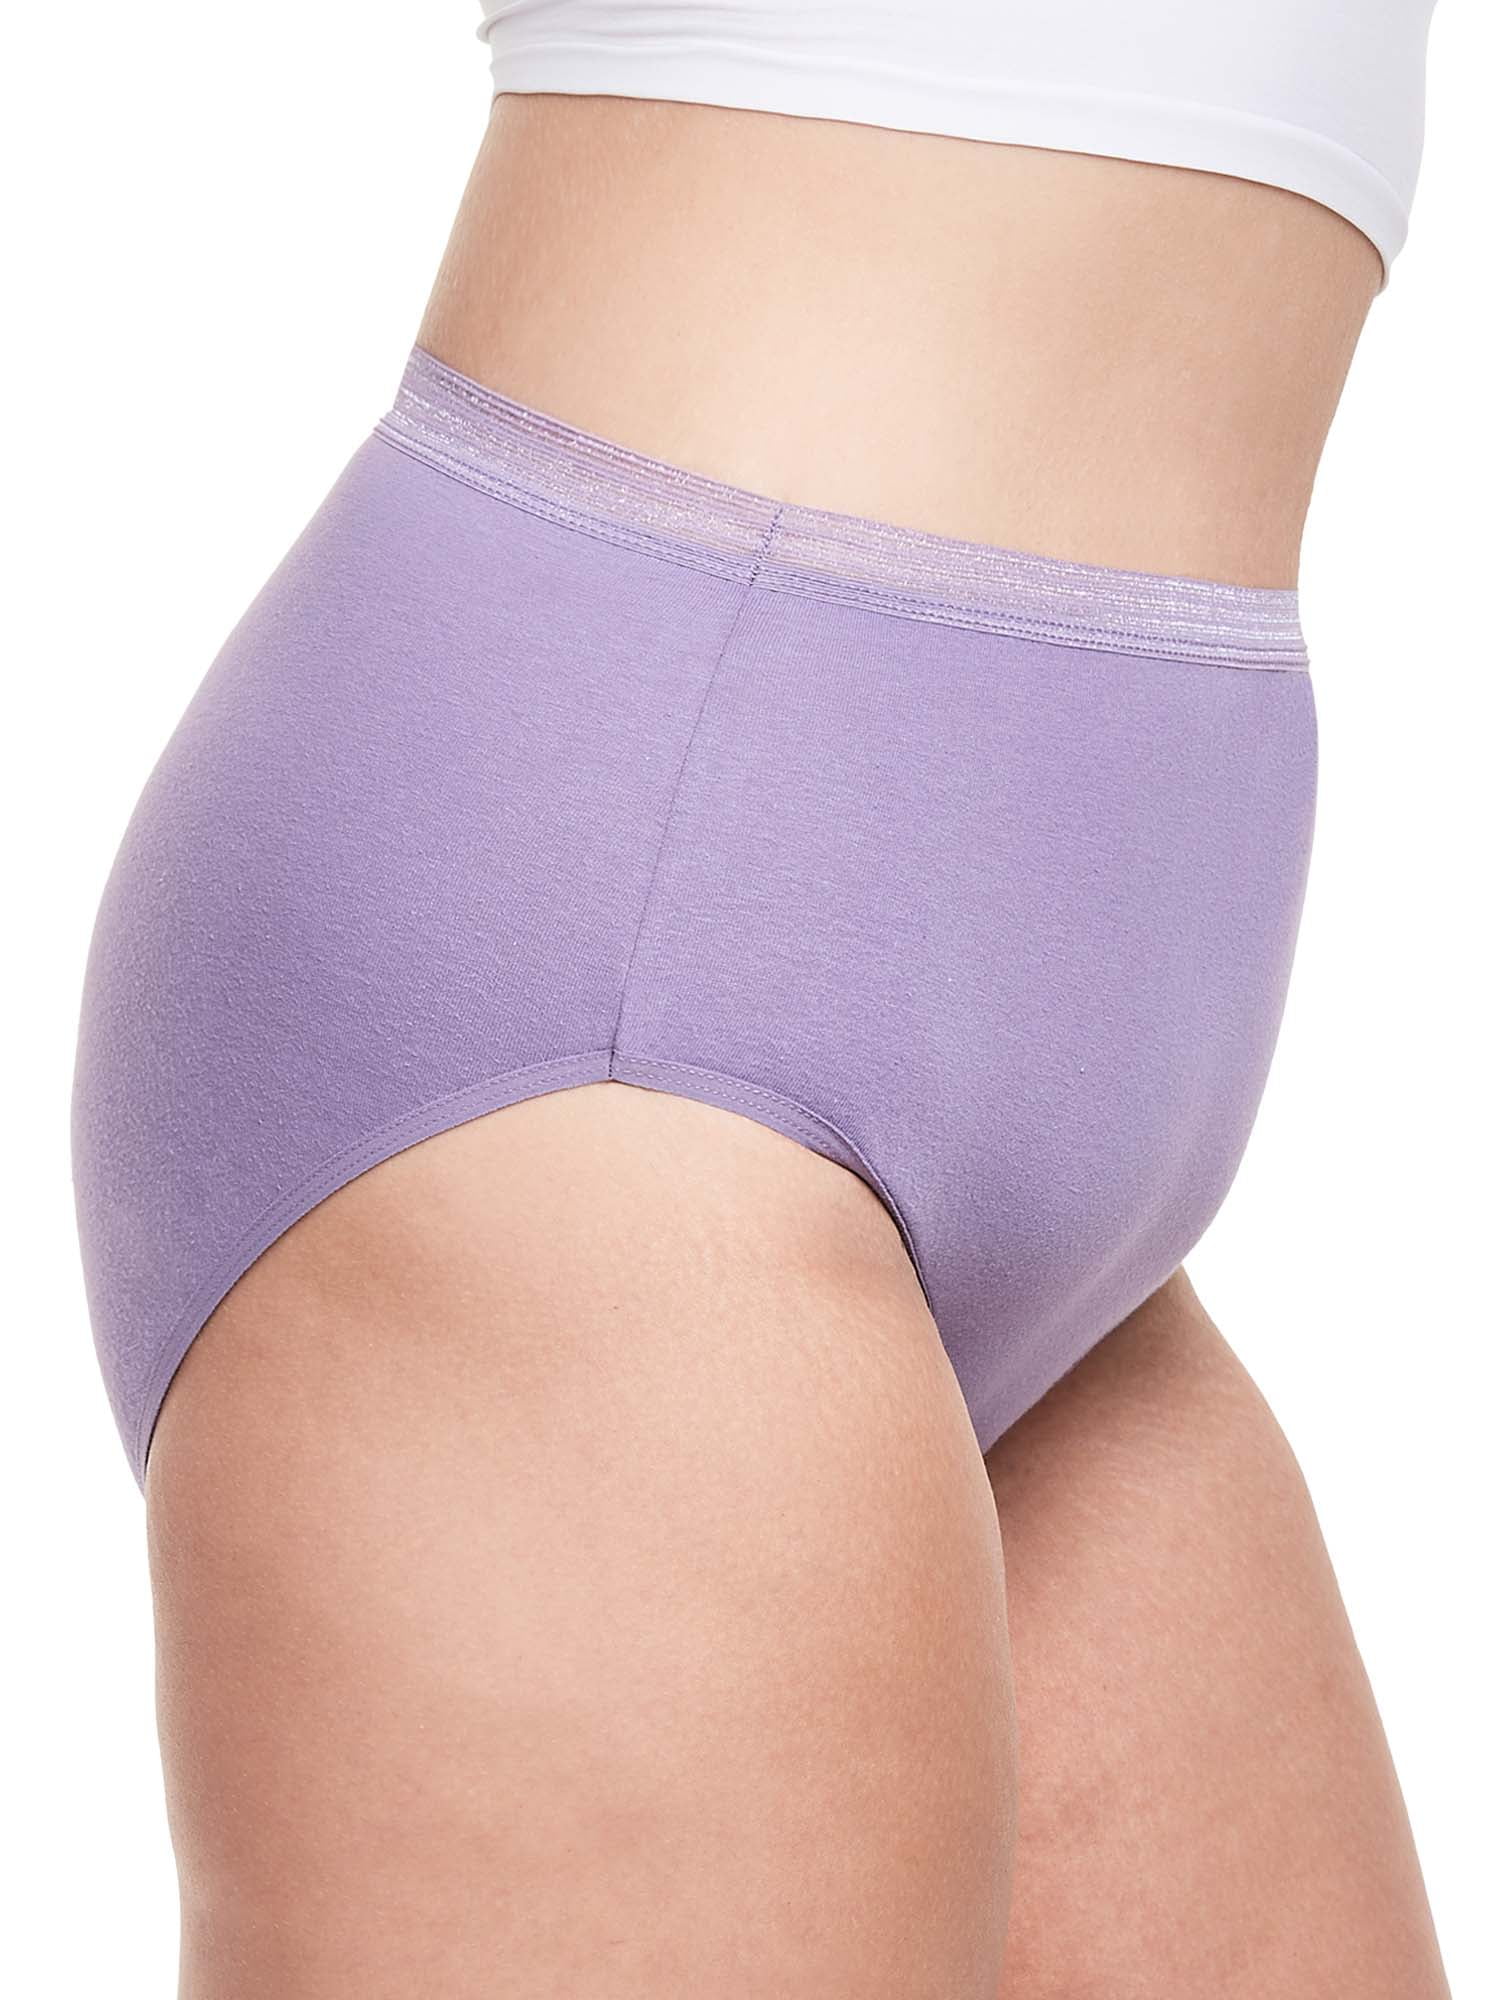 Hanes Women's Plus Size Cotton Brief Panties Multi-Packs, 6 Pack - Body  Tones, 10 price in UAE,  UAE